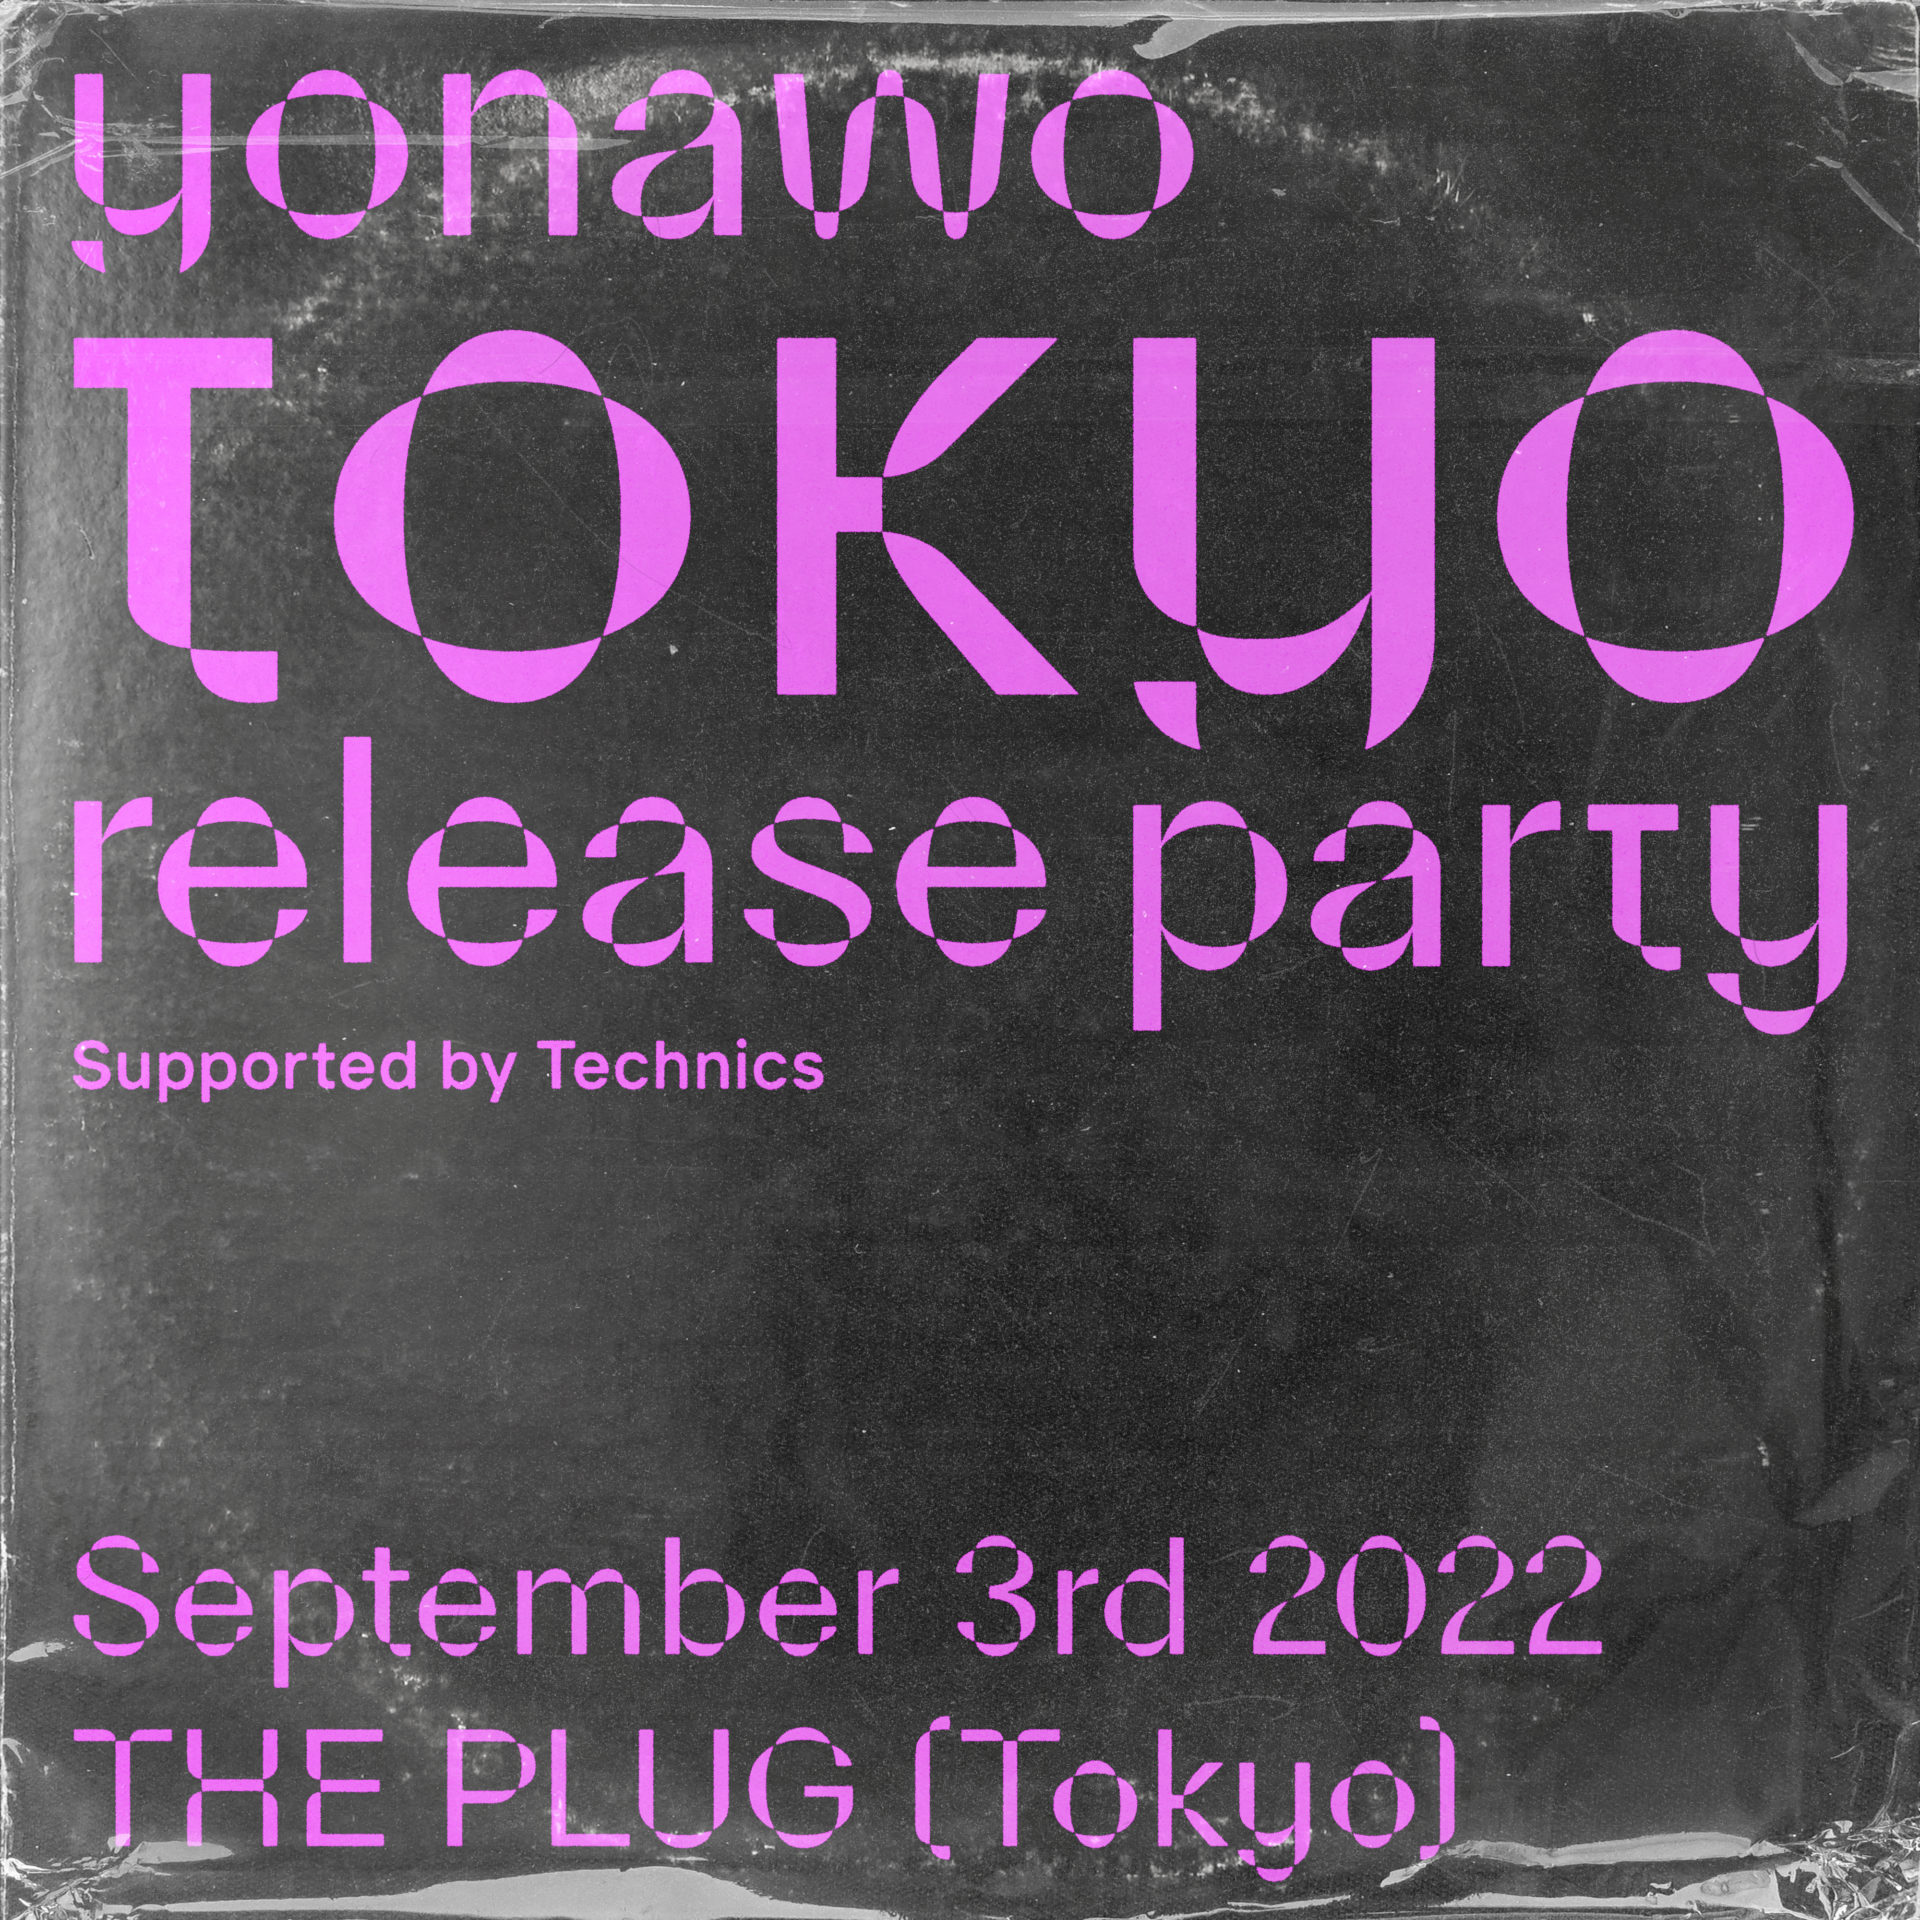 tokyo feat. 鈴木真海子, Skaai」のrelease partyを9月3日(土)に東京